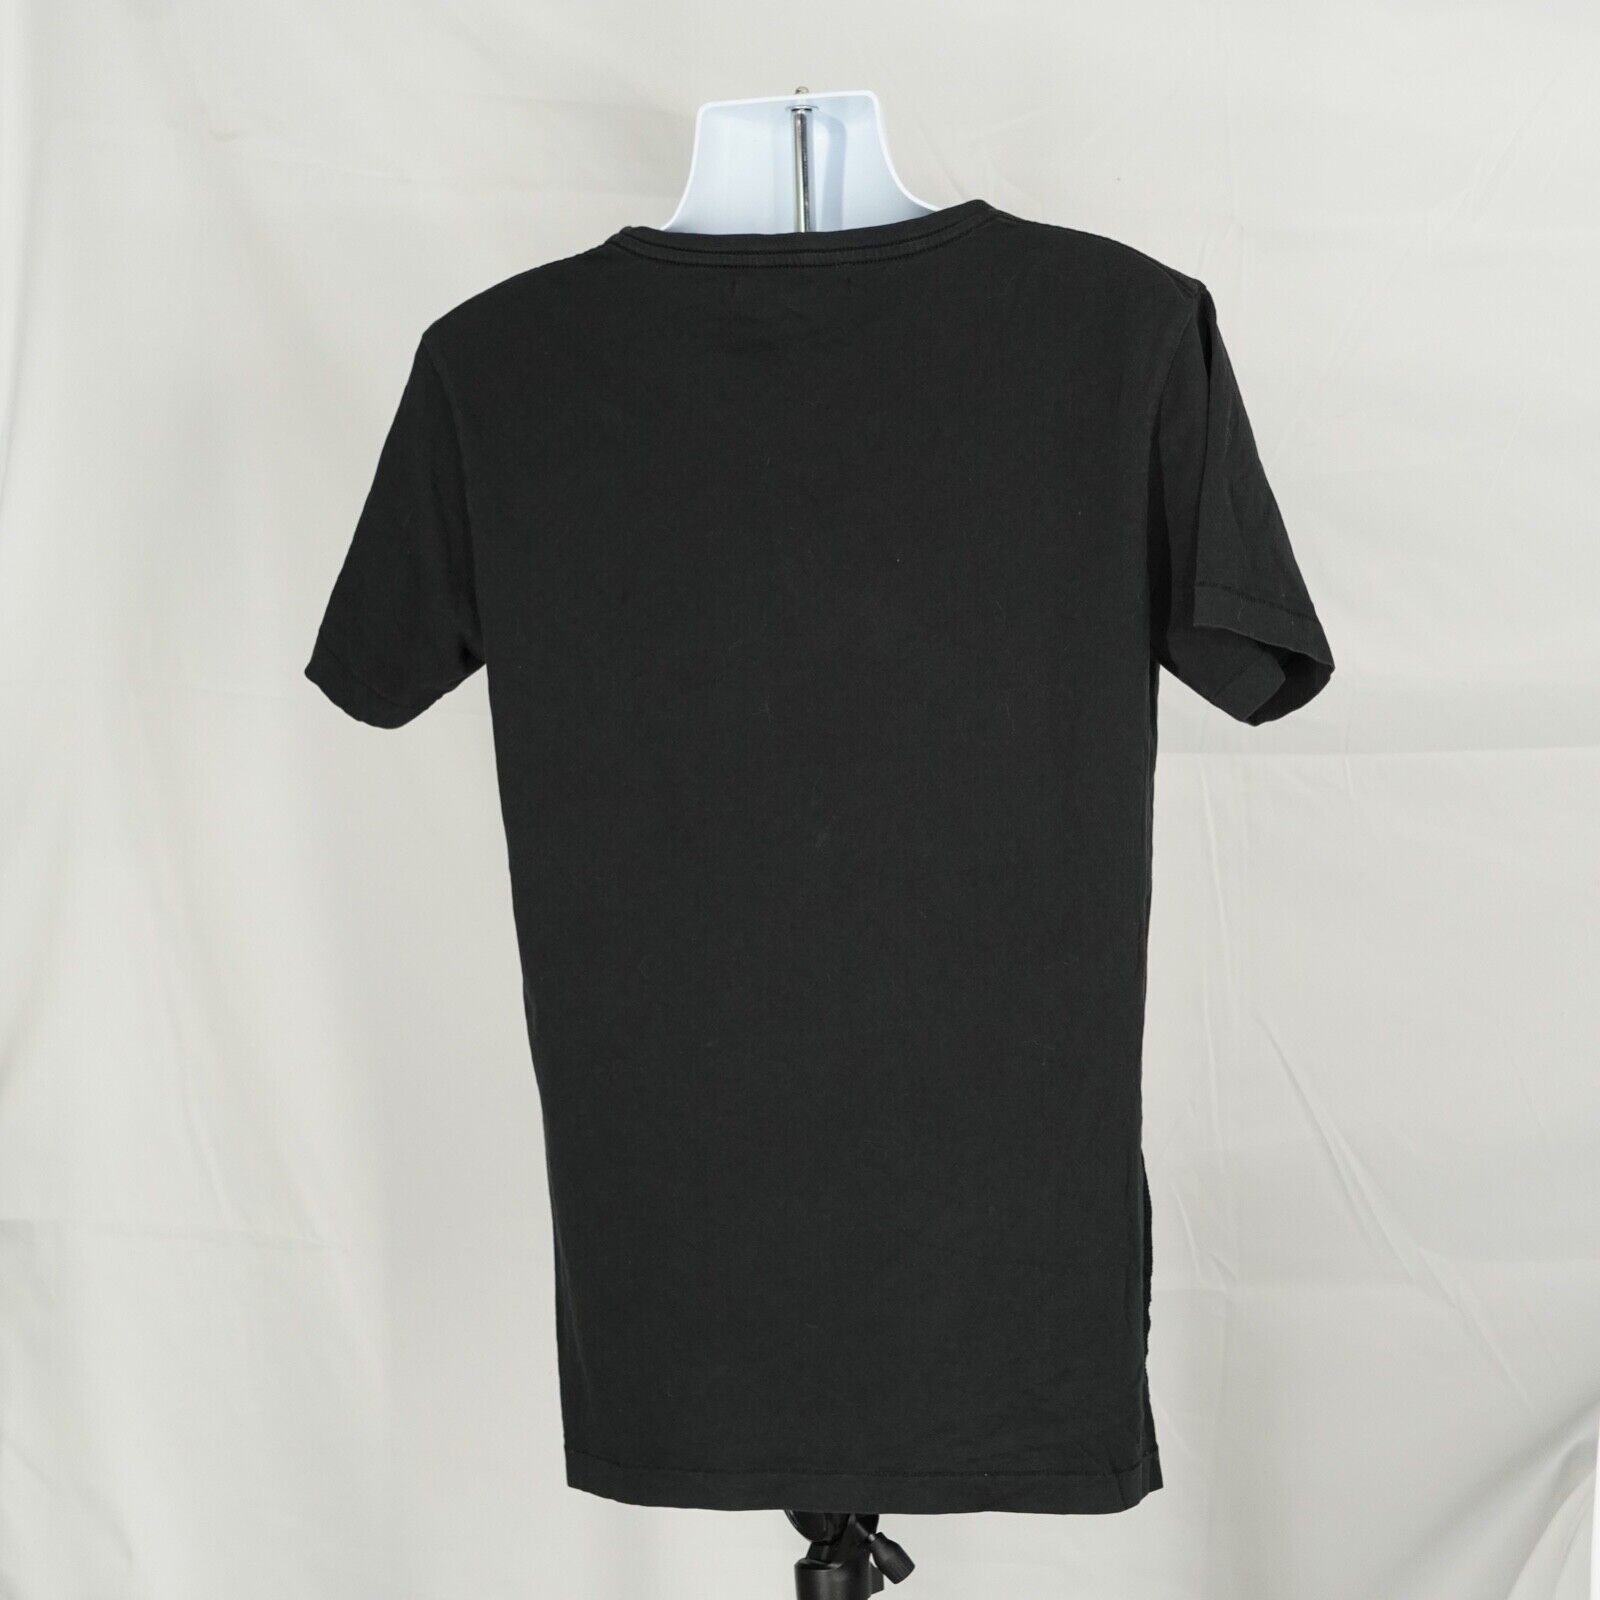 Tsubi Black Cross Graphic T Shirt - 7